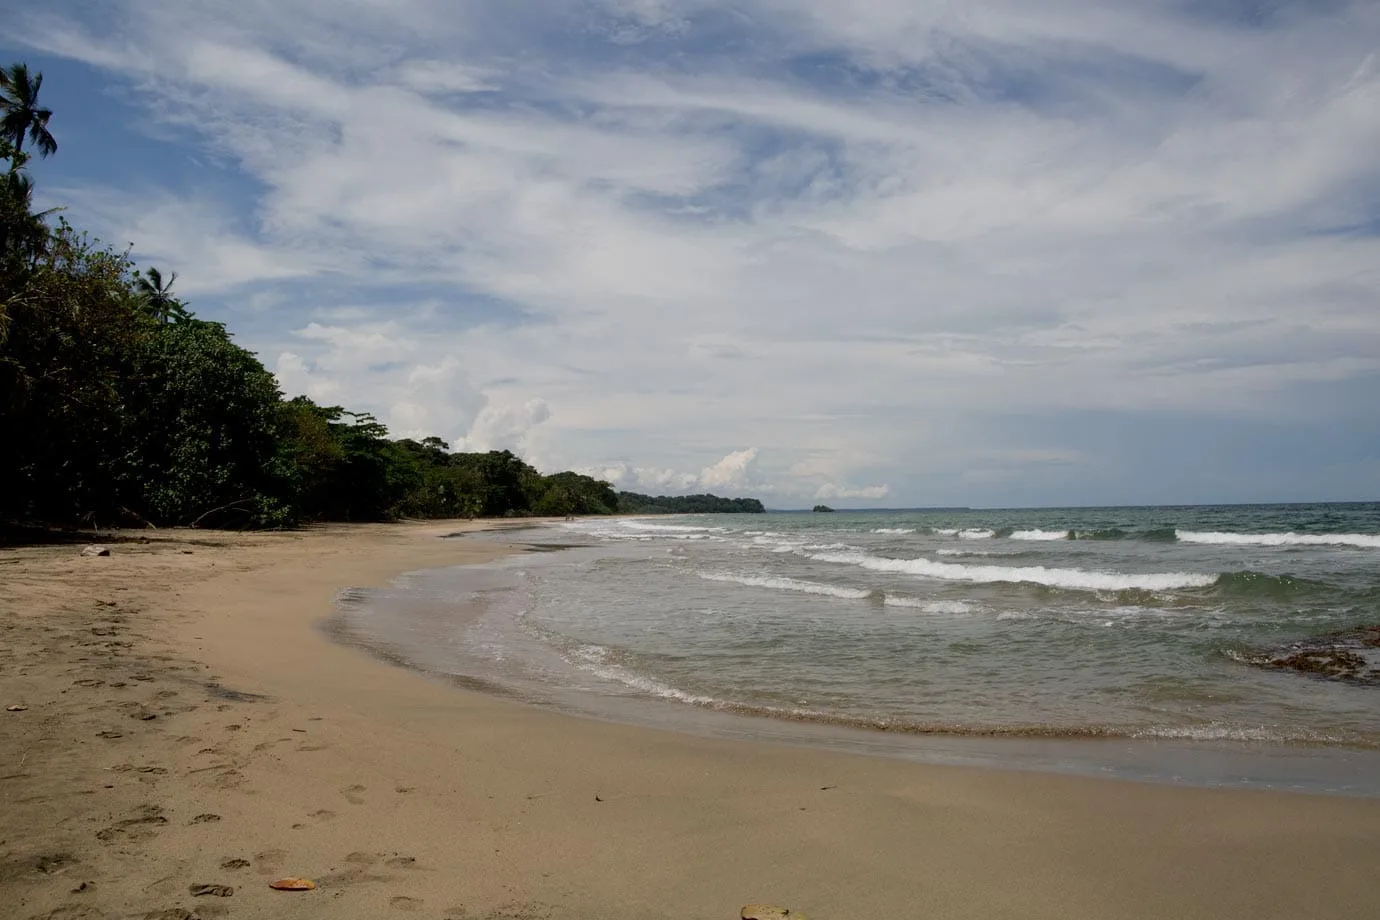 A quiet beach outside Puerto Viejo